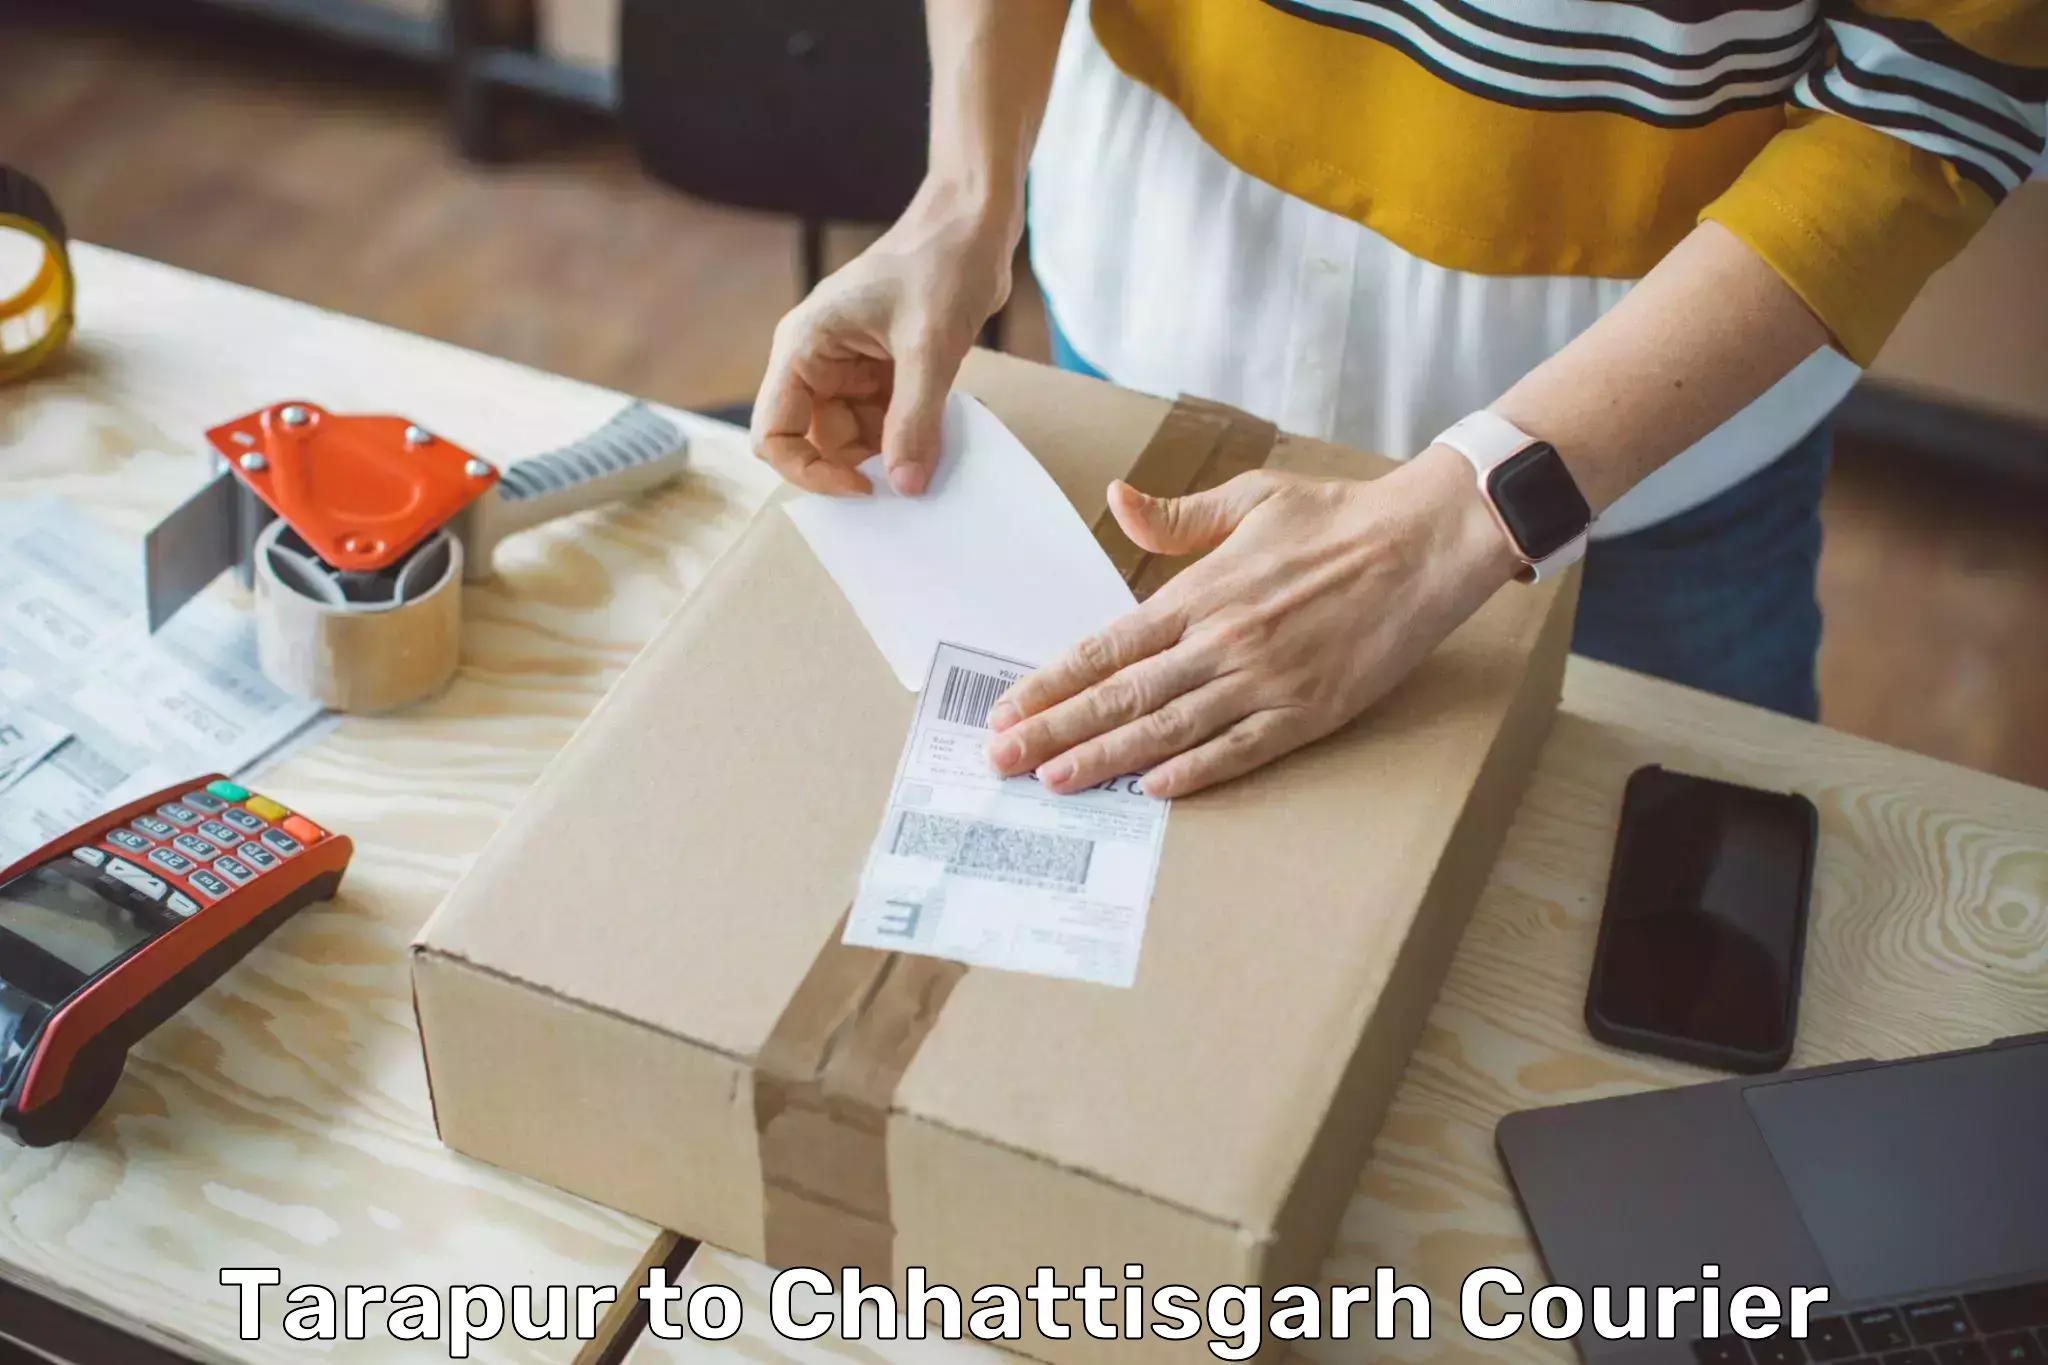 Courier service innovation Tarapur to Chhattisgarh